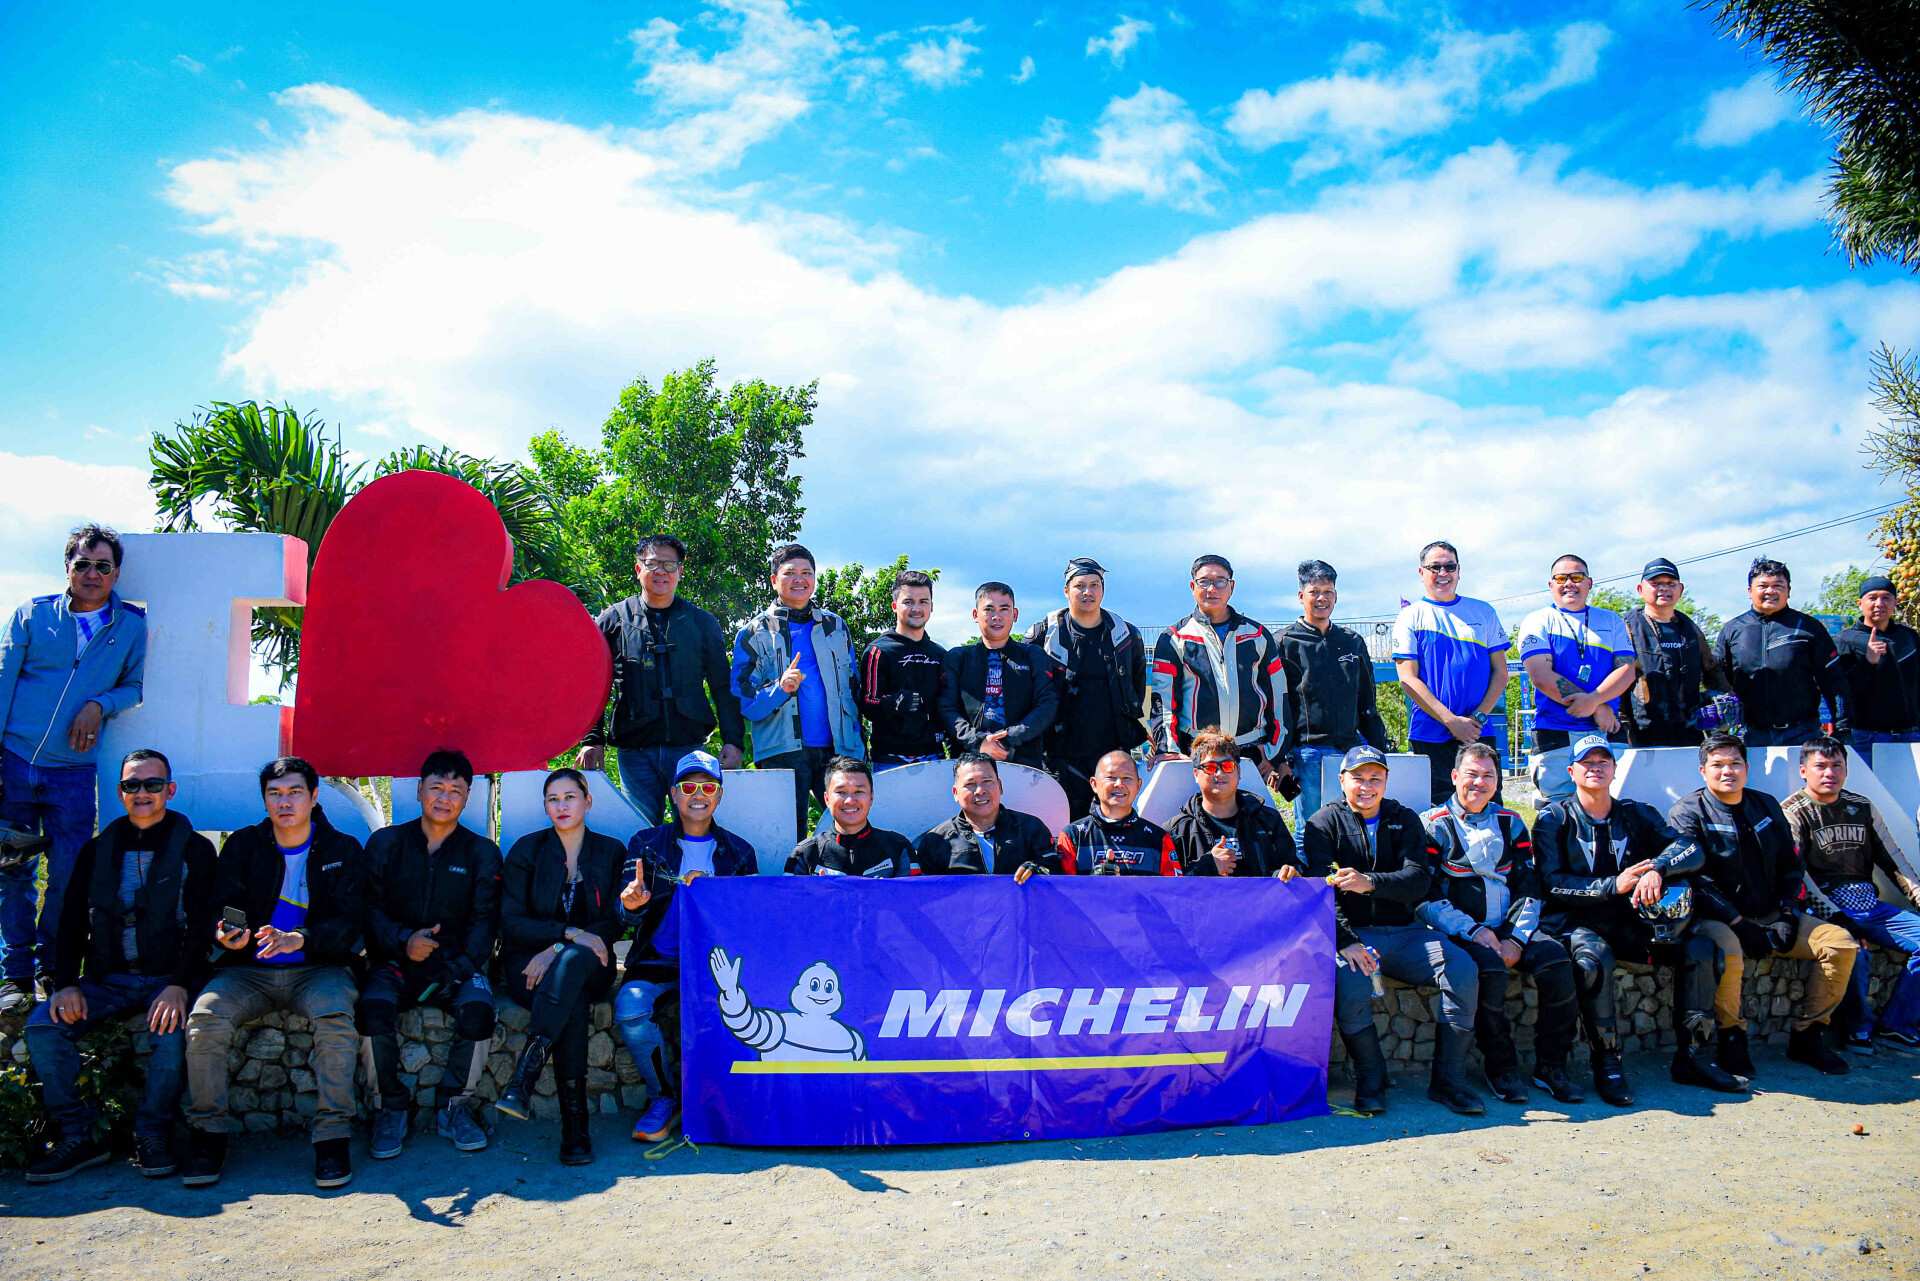 Michelin Motorcycle Tires Breakfast Ride in Dingalan, Aurora